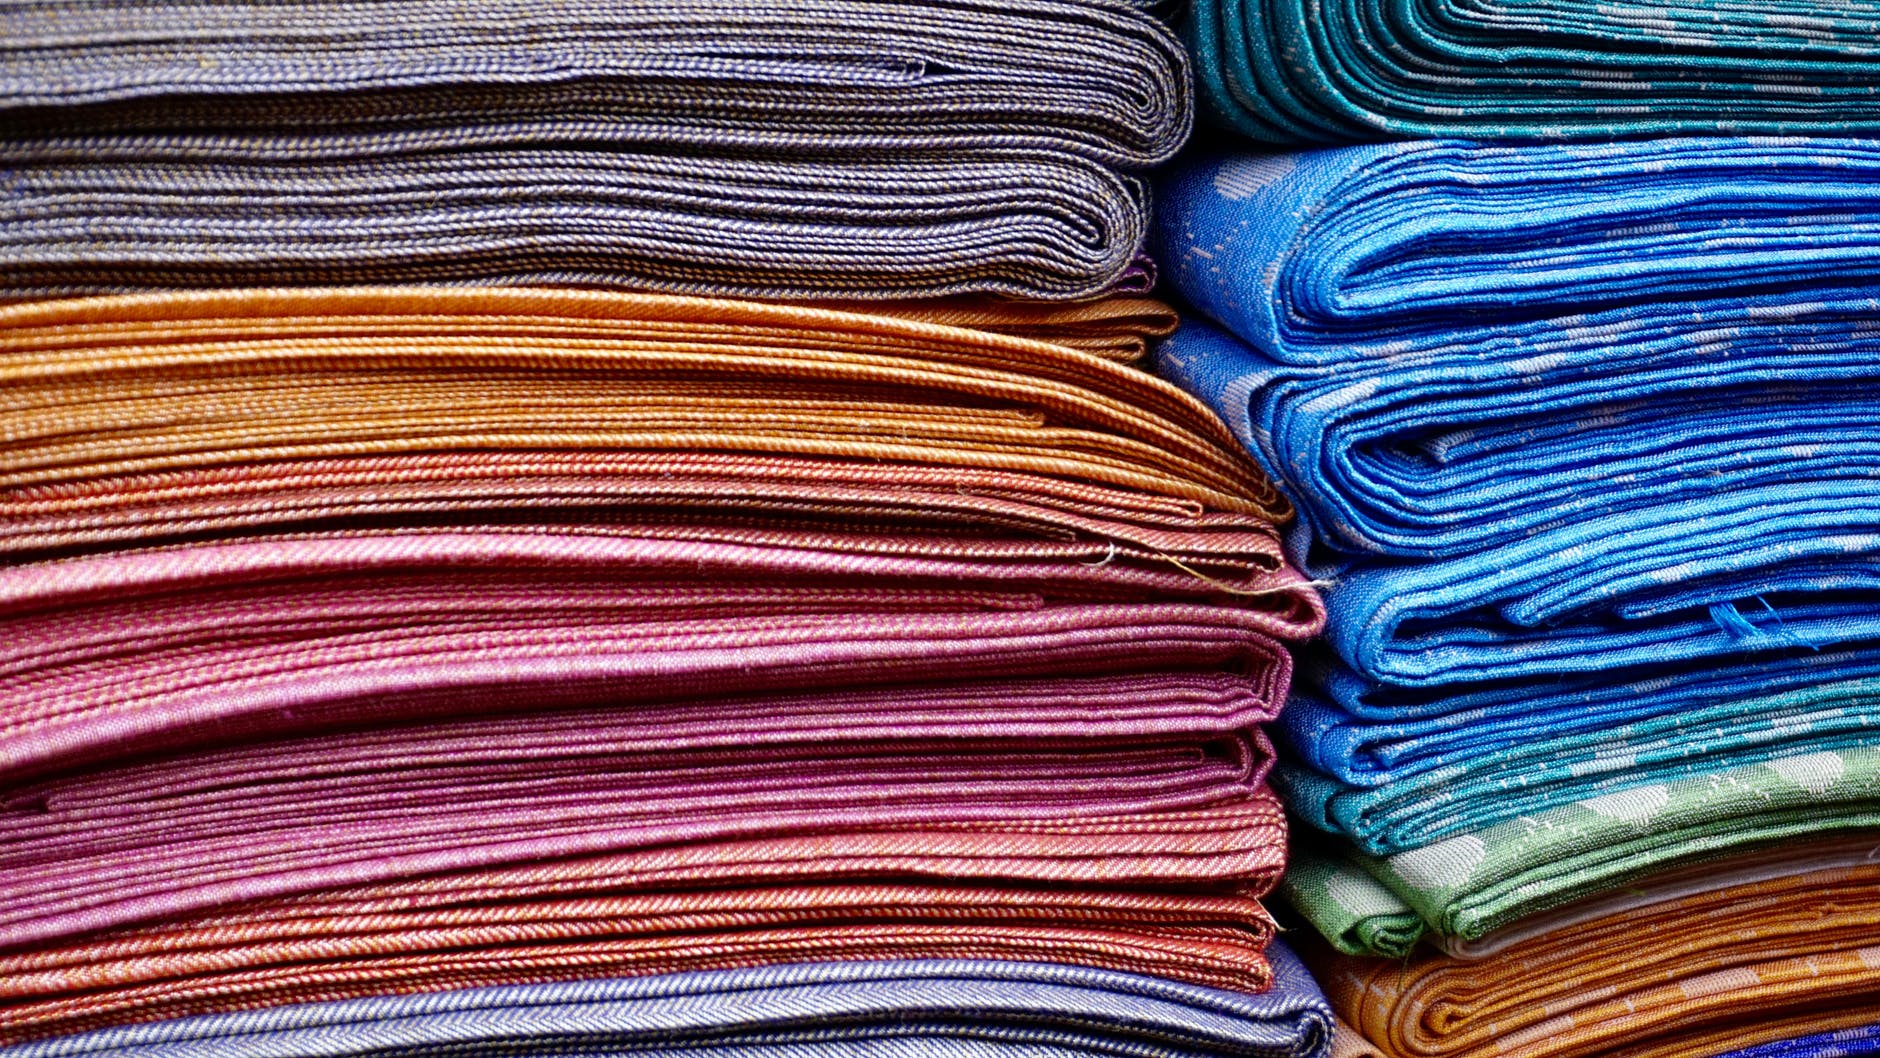 چگونگی تعیین تفاوت رنگ در صنعت تولید پوشاک - صنعت نساجی, صنعت پوشاک, رنگرزی پارچه, رنگرزی, تولید پوشاک, تکنولوژی رنگ